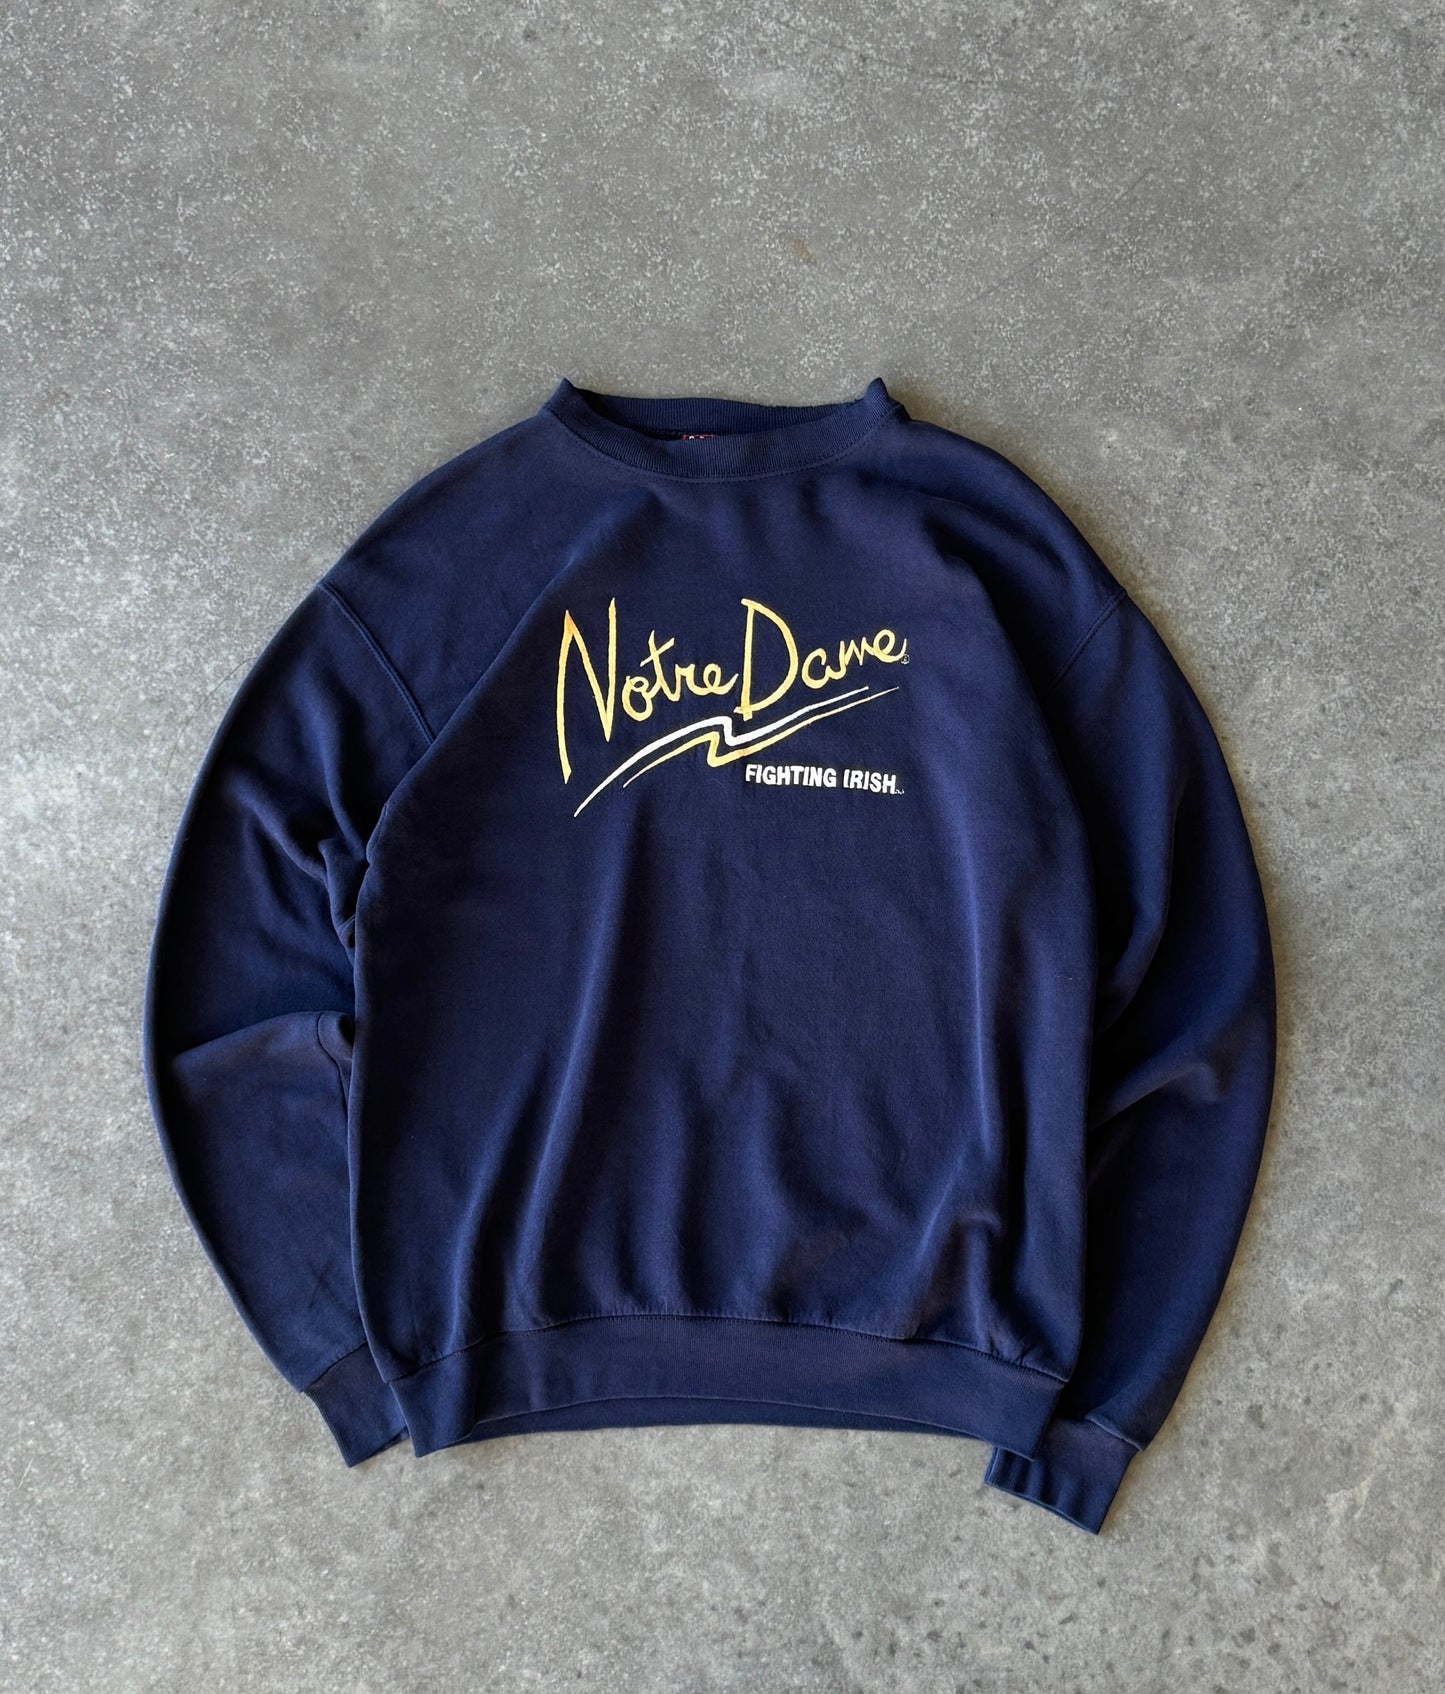 Vintage Notre Dame Embroidered Sweater (L)